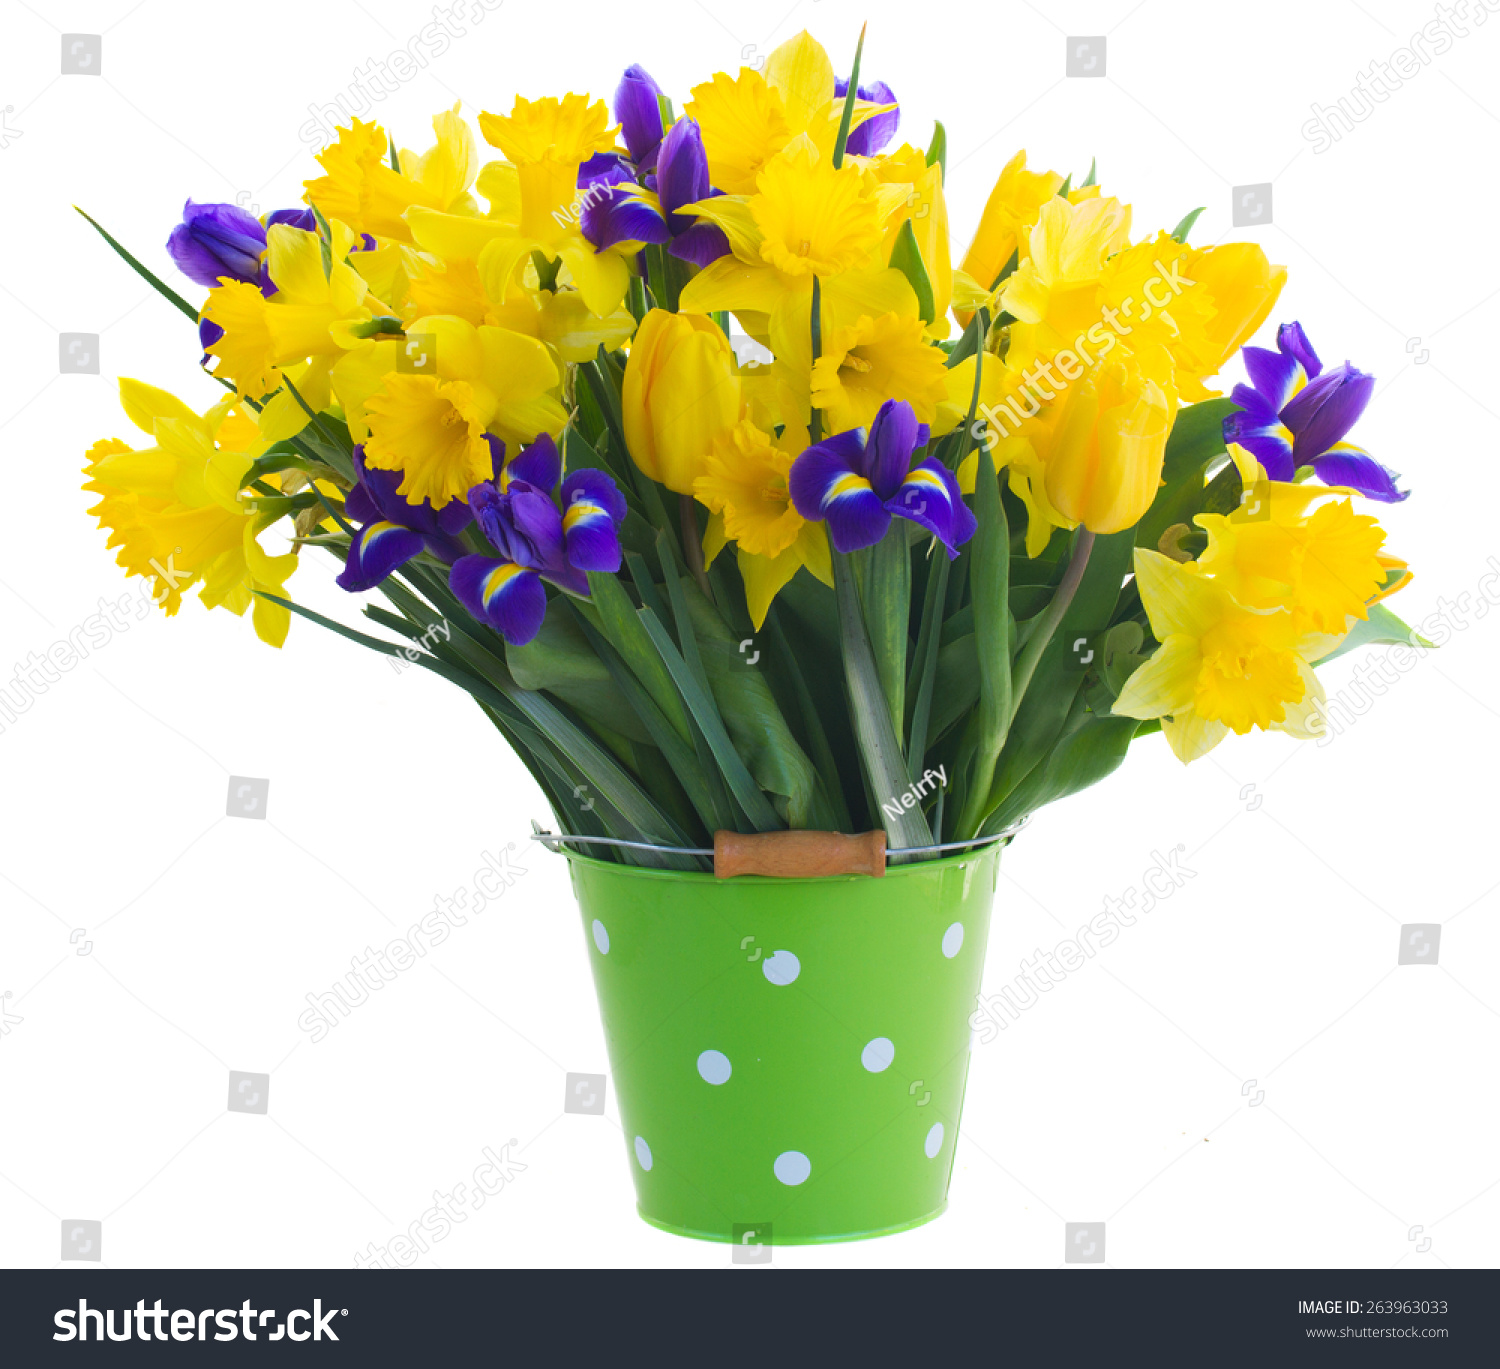 Bunch Fresh Spring Yellow Daffodils Irises Stock Photo 263963033 ...